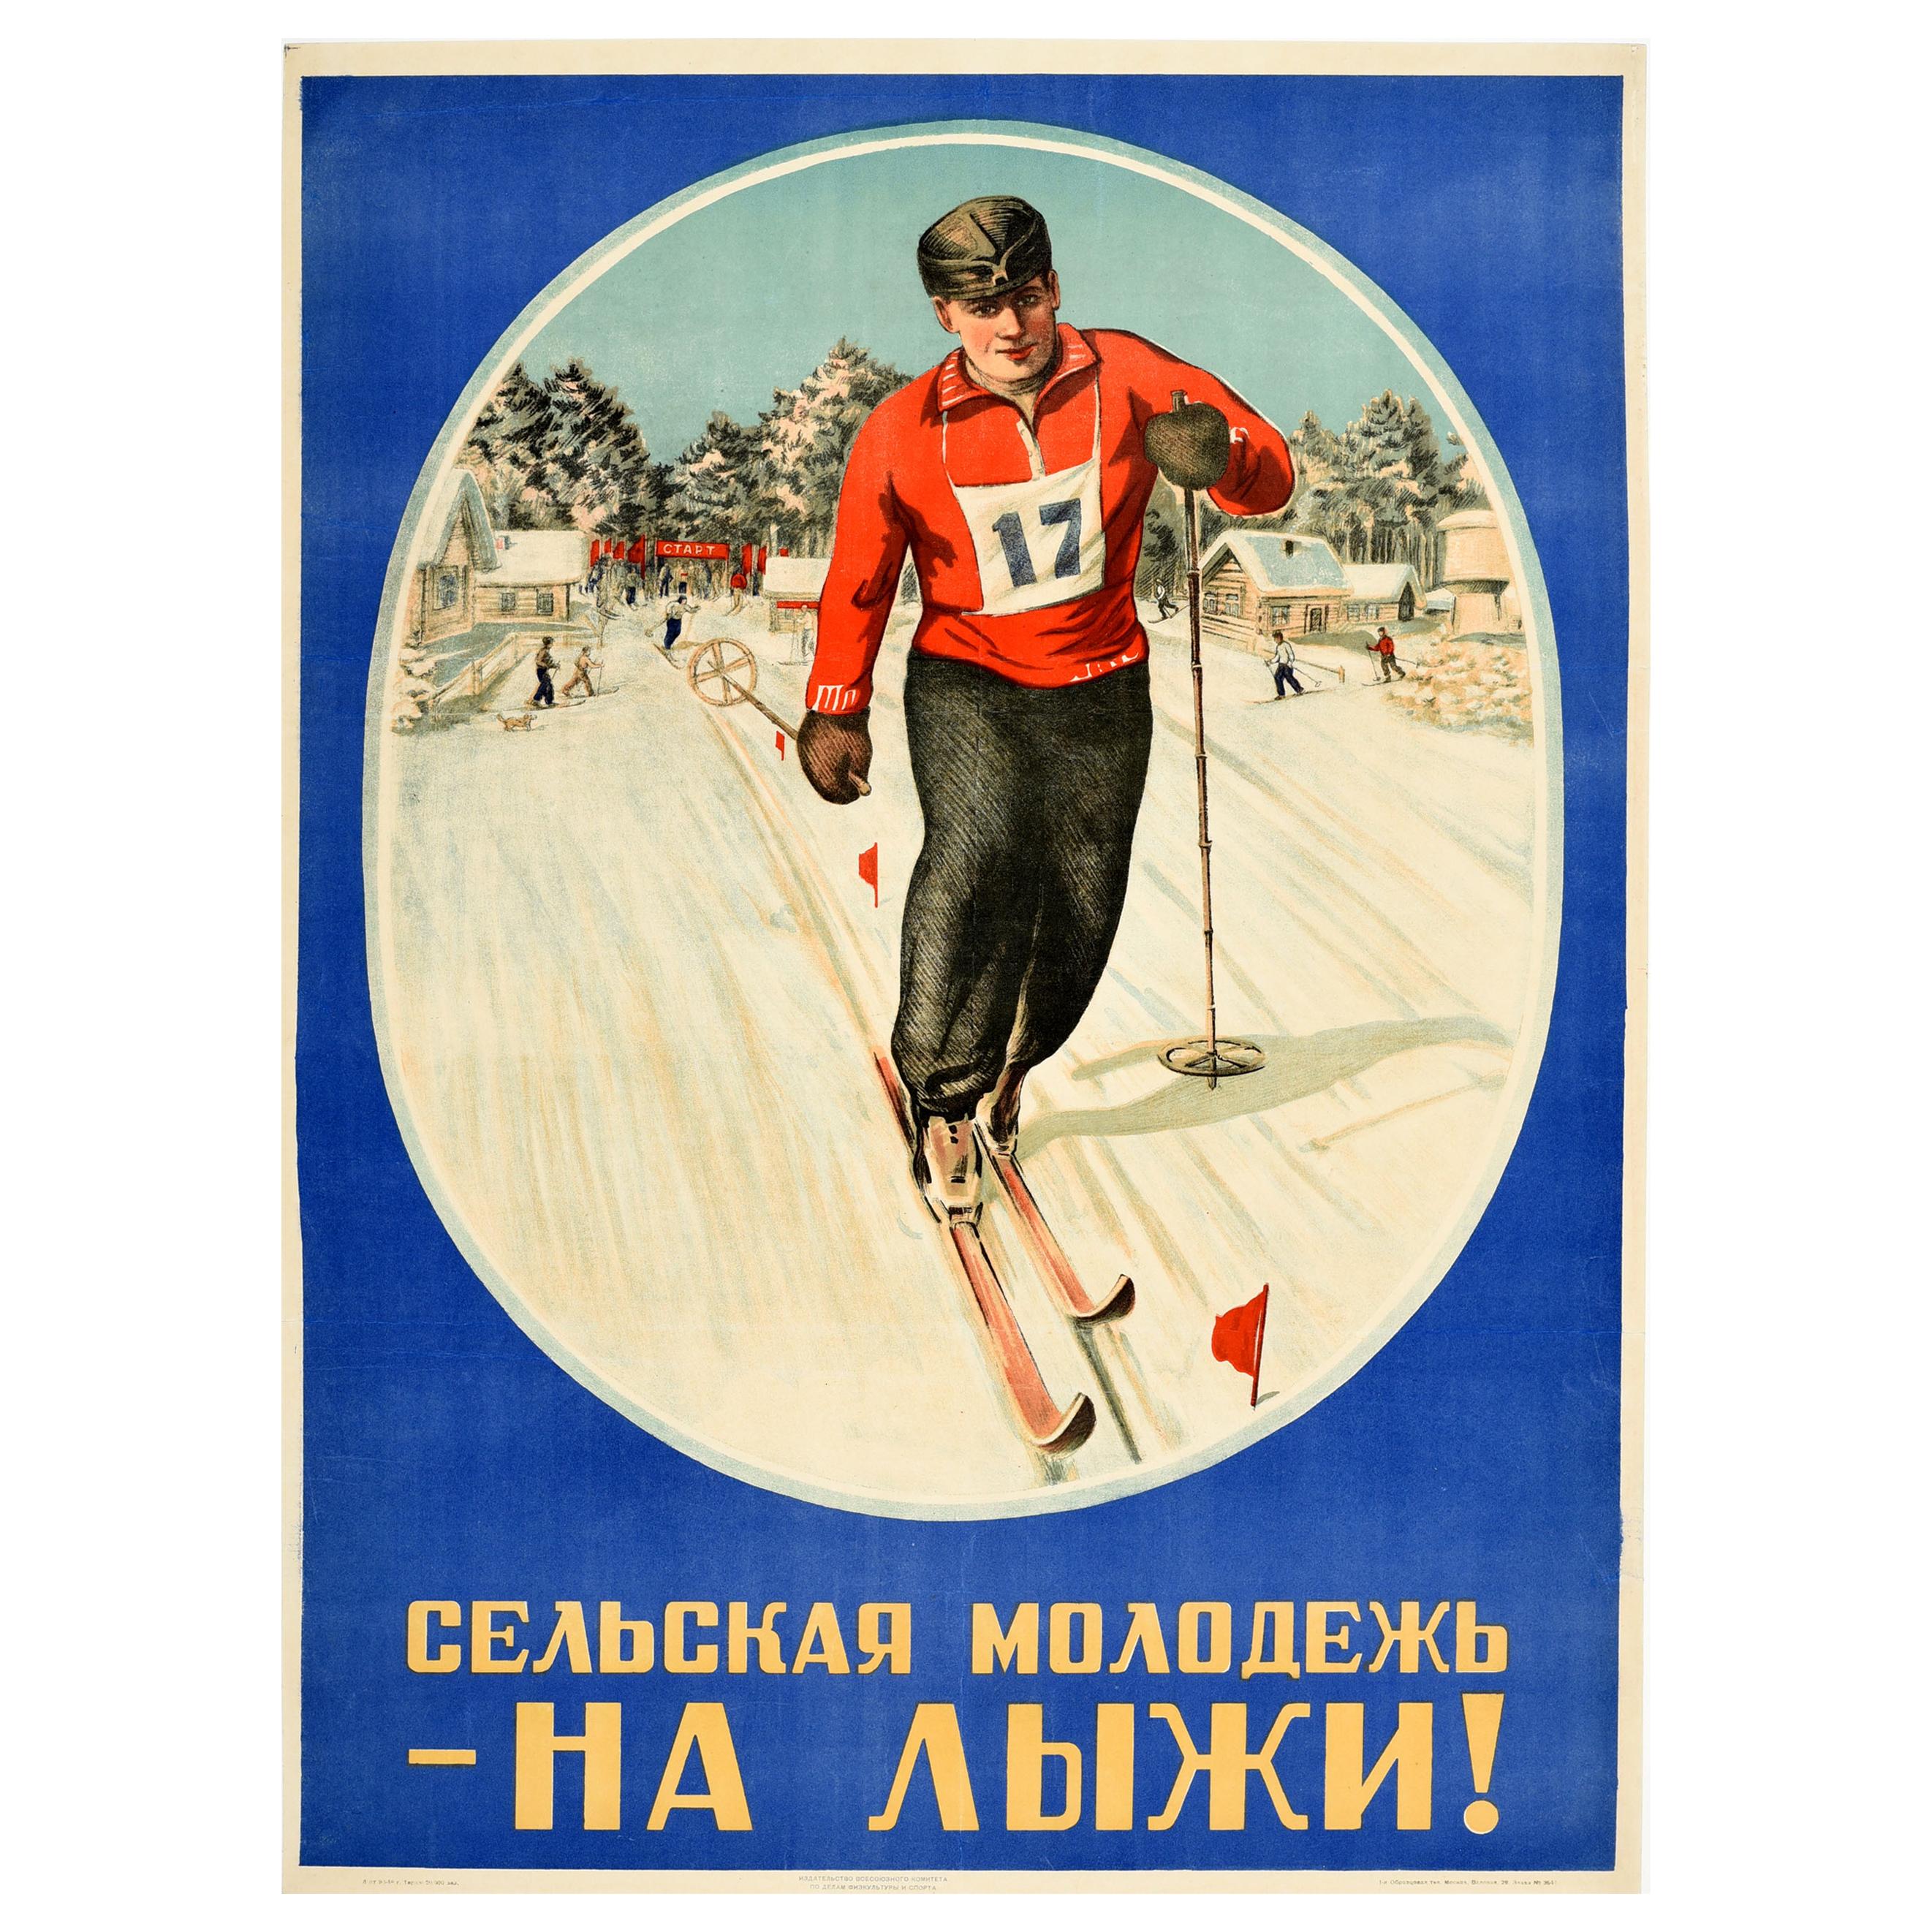 Original Vintage Soviet Winter Sport Poster Rural Youth On Skis! Ft Skiing Scene